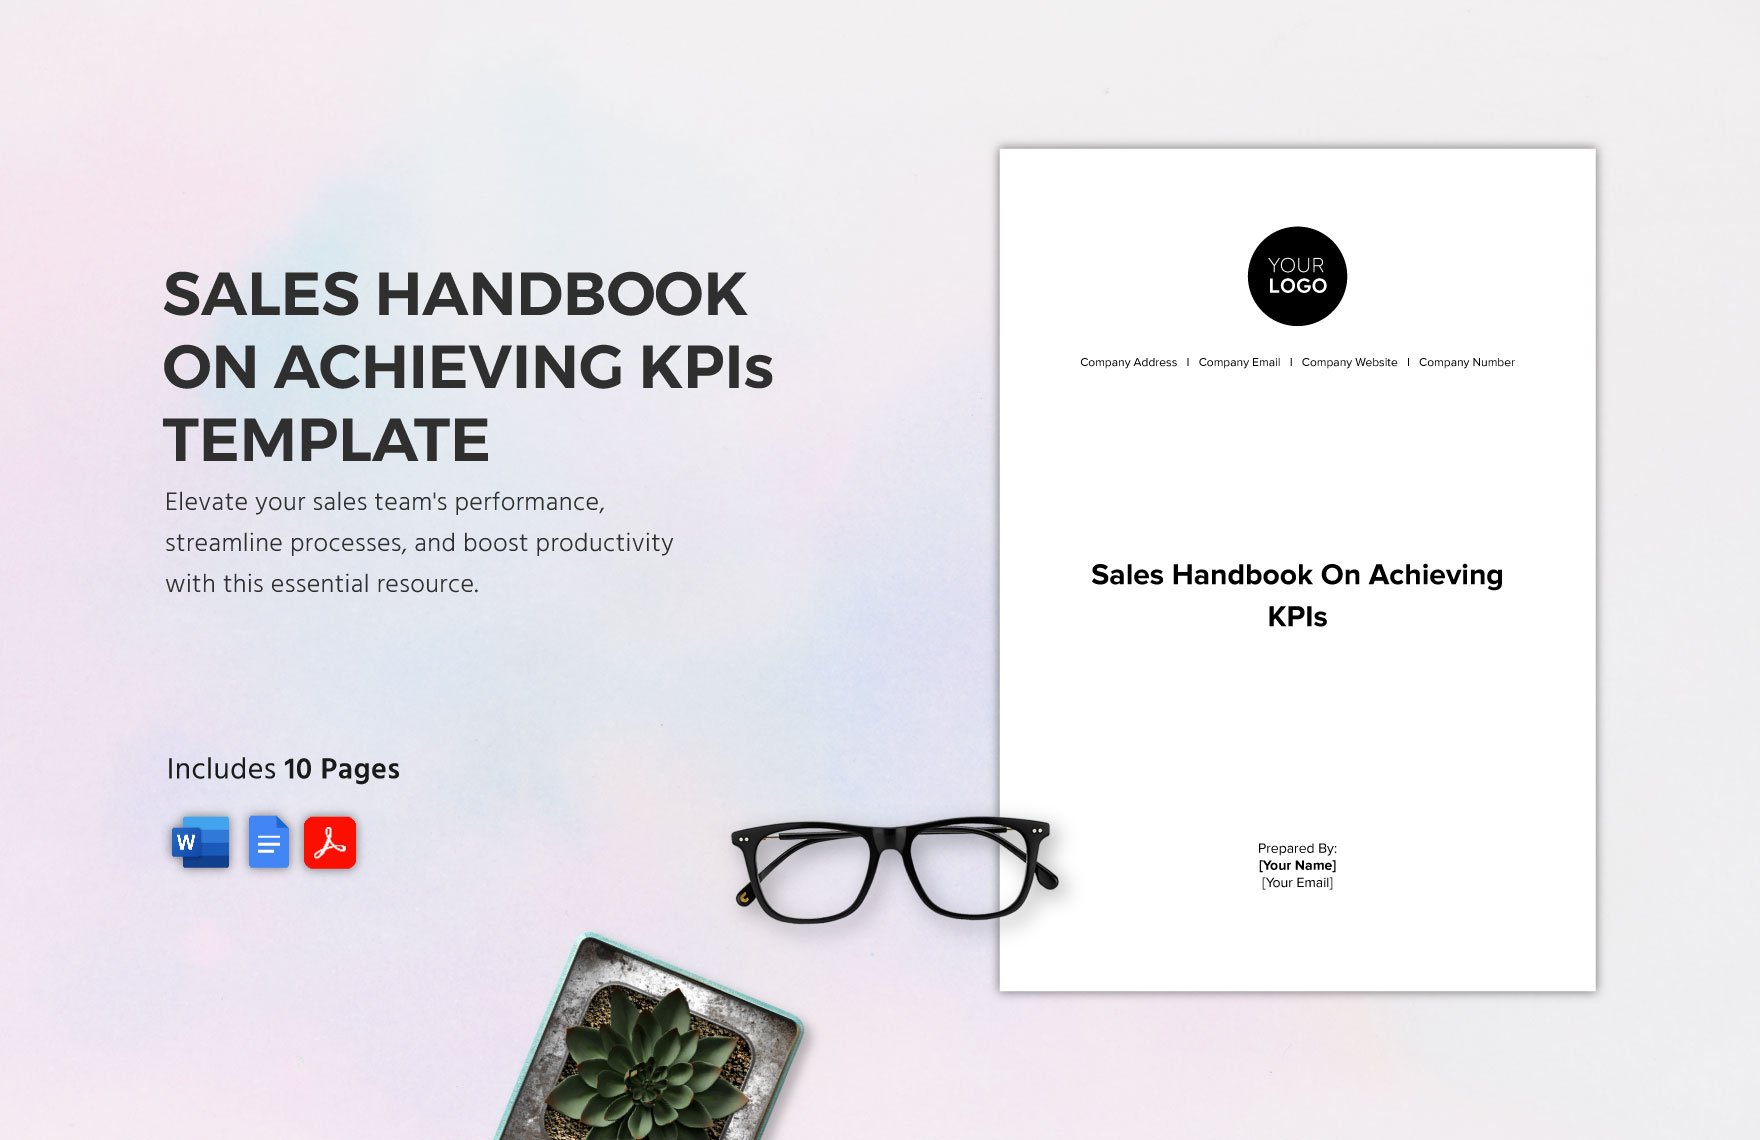 Sales Handbook on Achieving KPIs Template